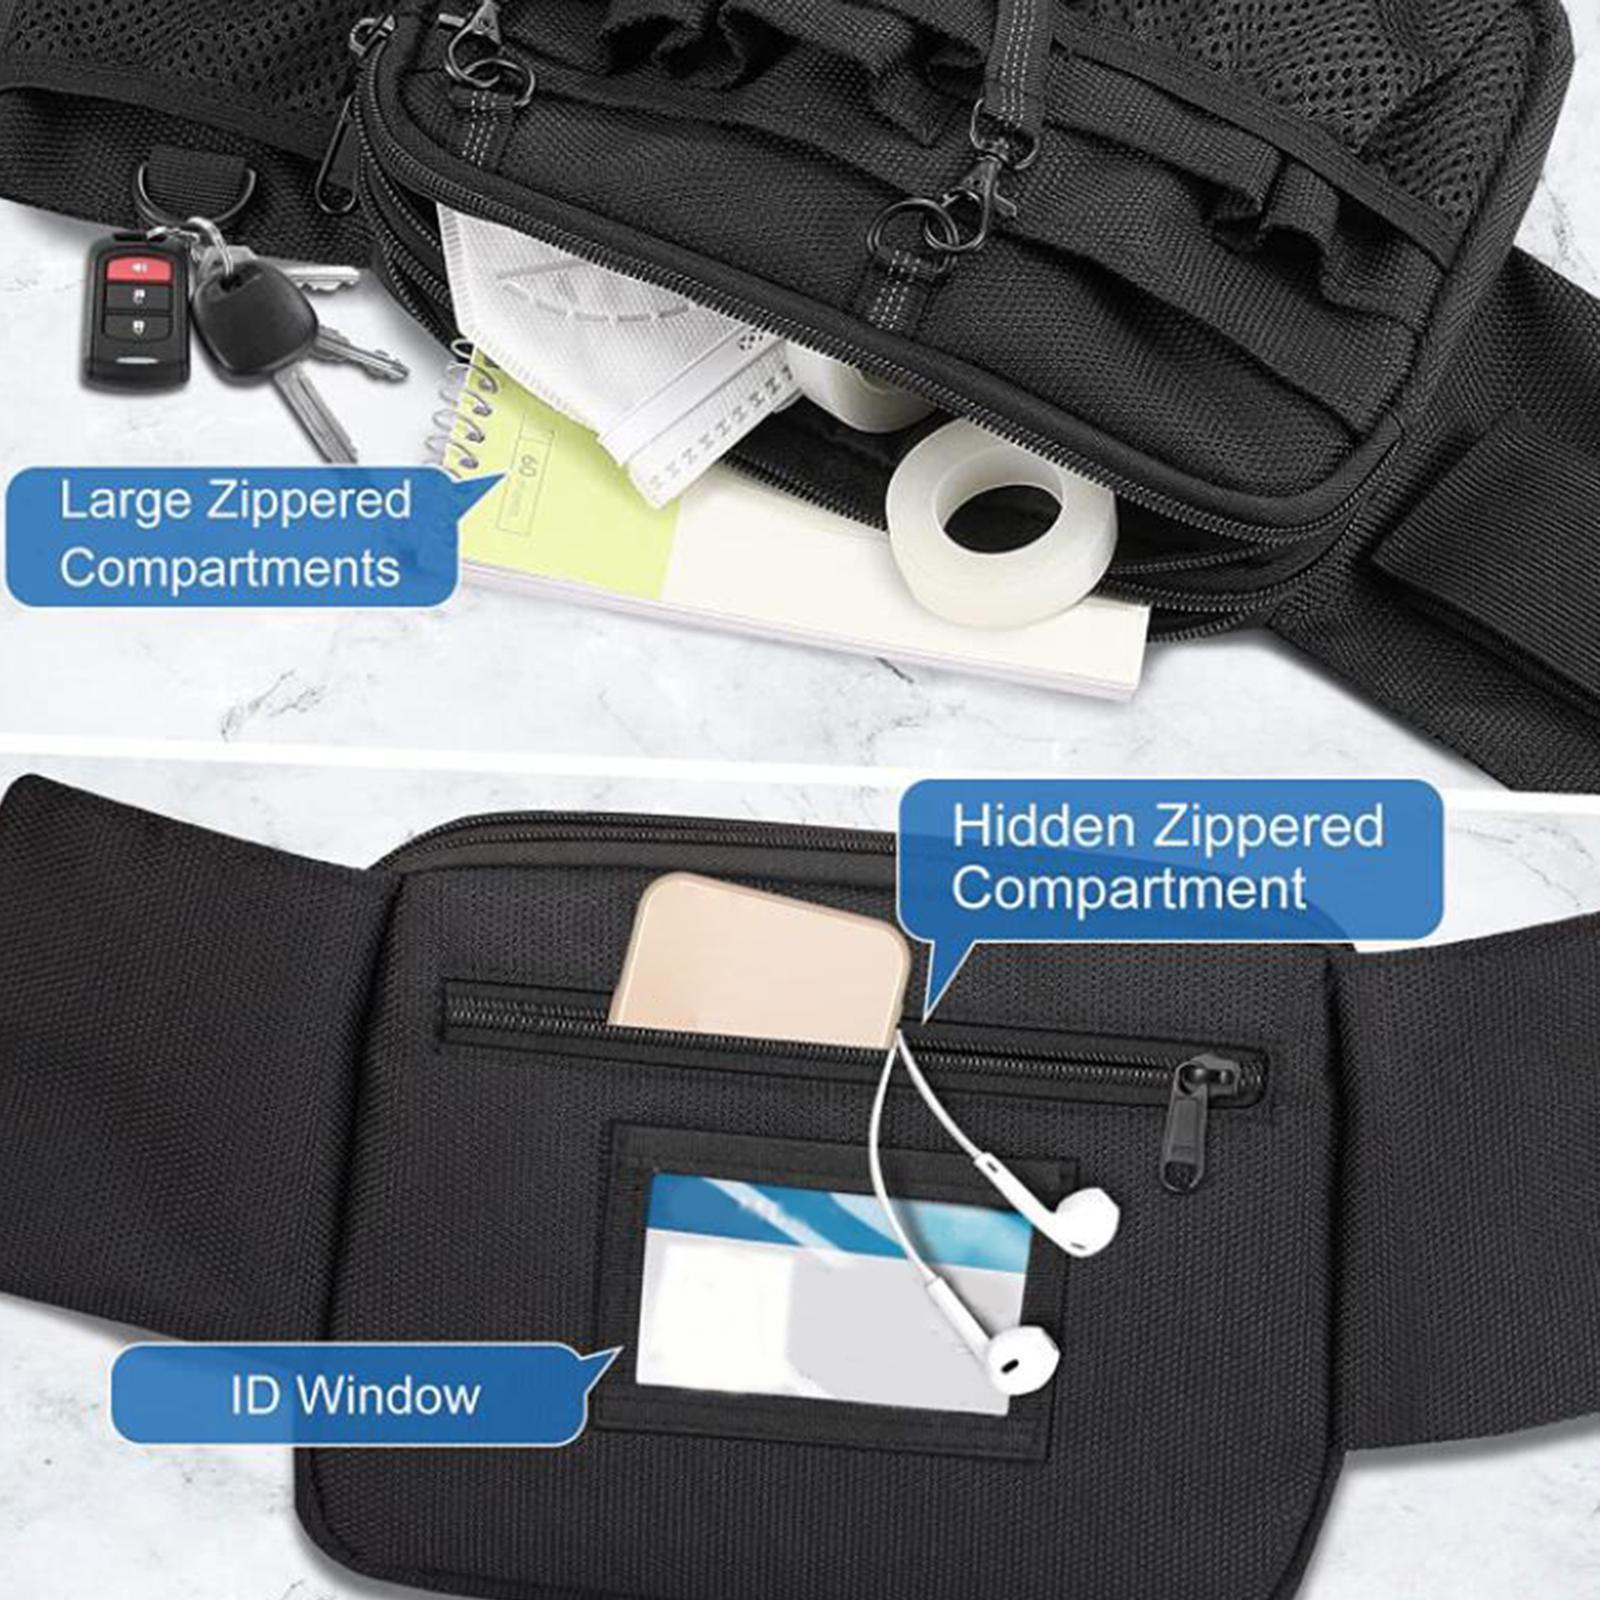 Nurse Fanny Pack Gear Pocket Emergency Supplies Holder Waist Bag Nurse